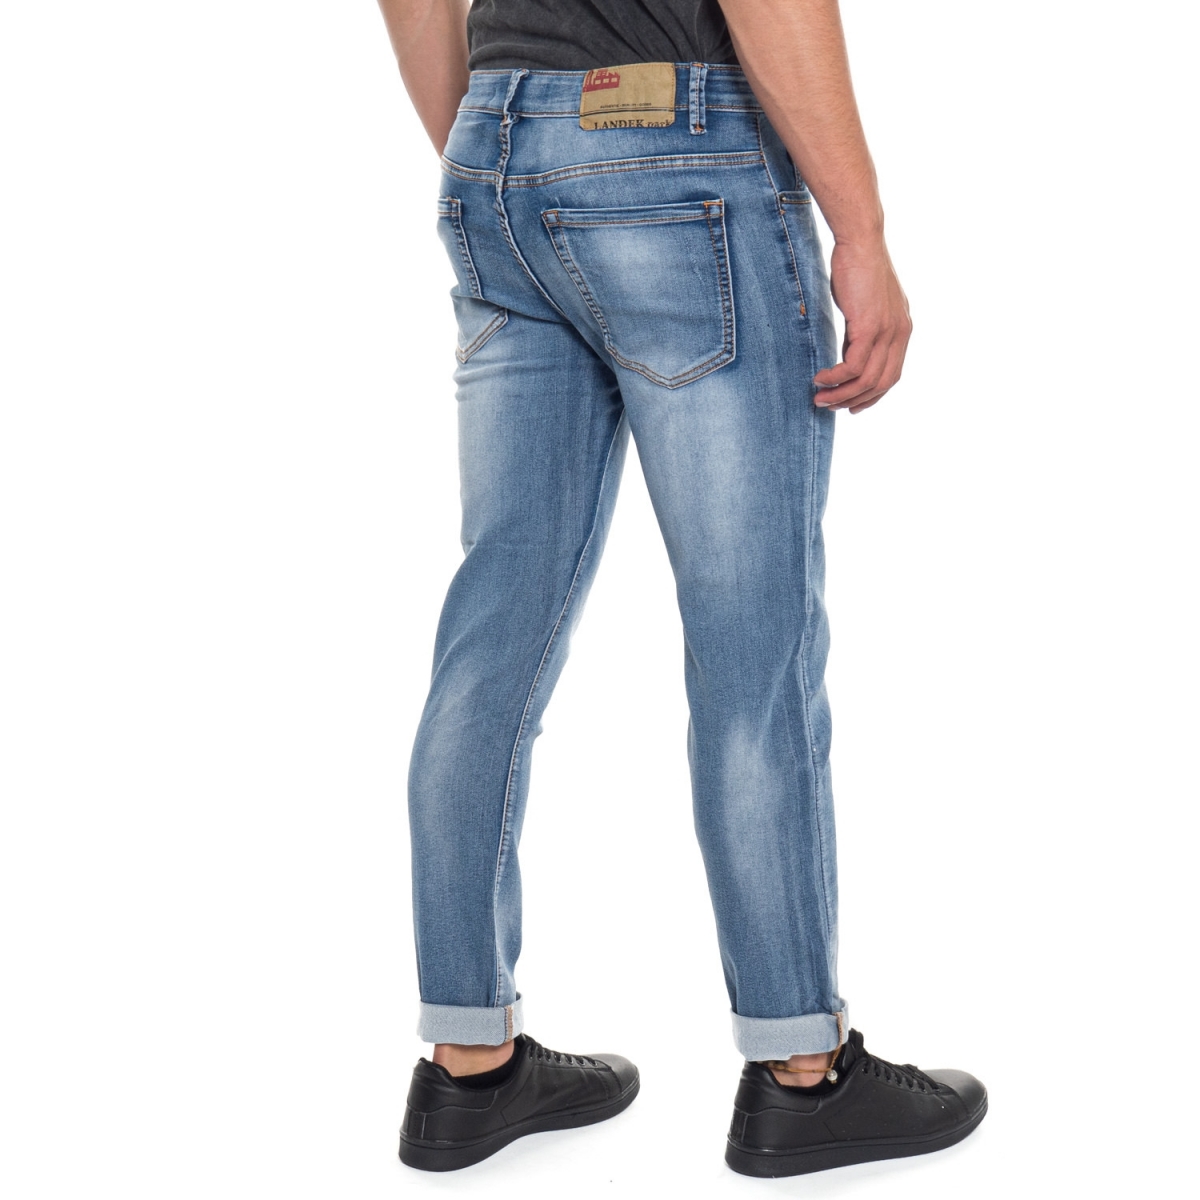 clothing Denim men Jeans LPHM1095 LANDEK PARK Cafedelmar Shop